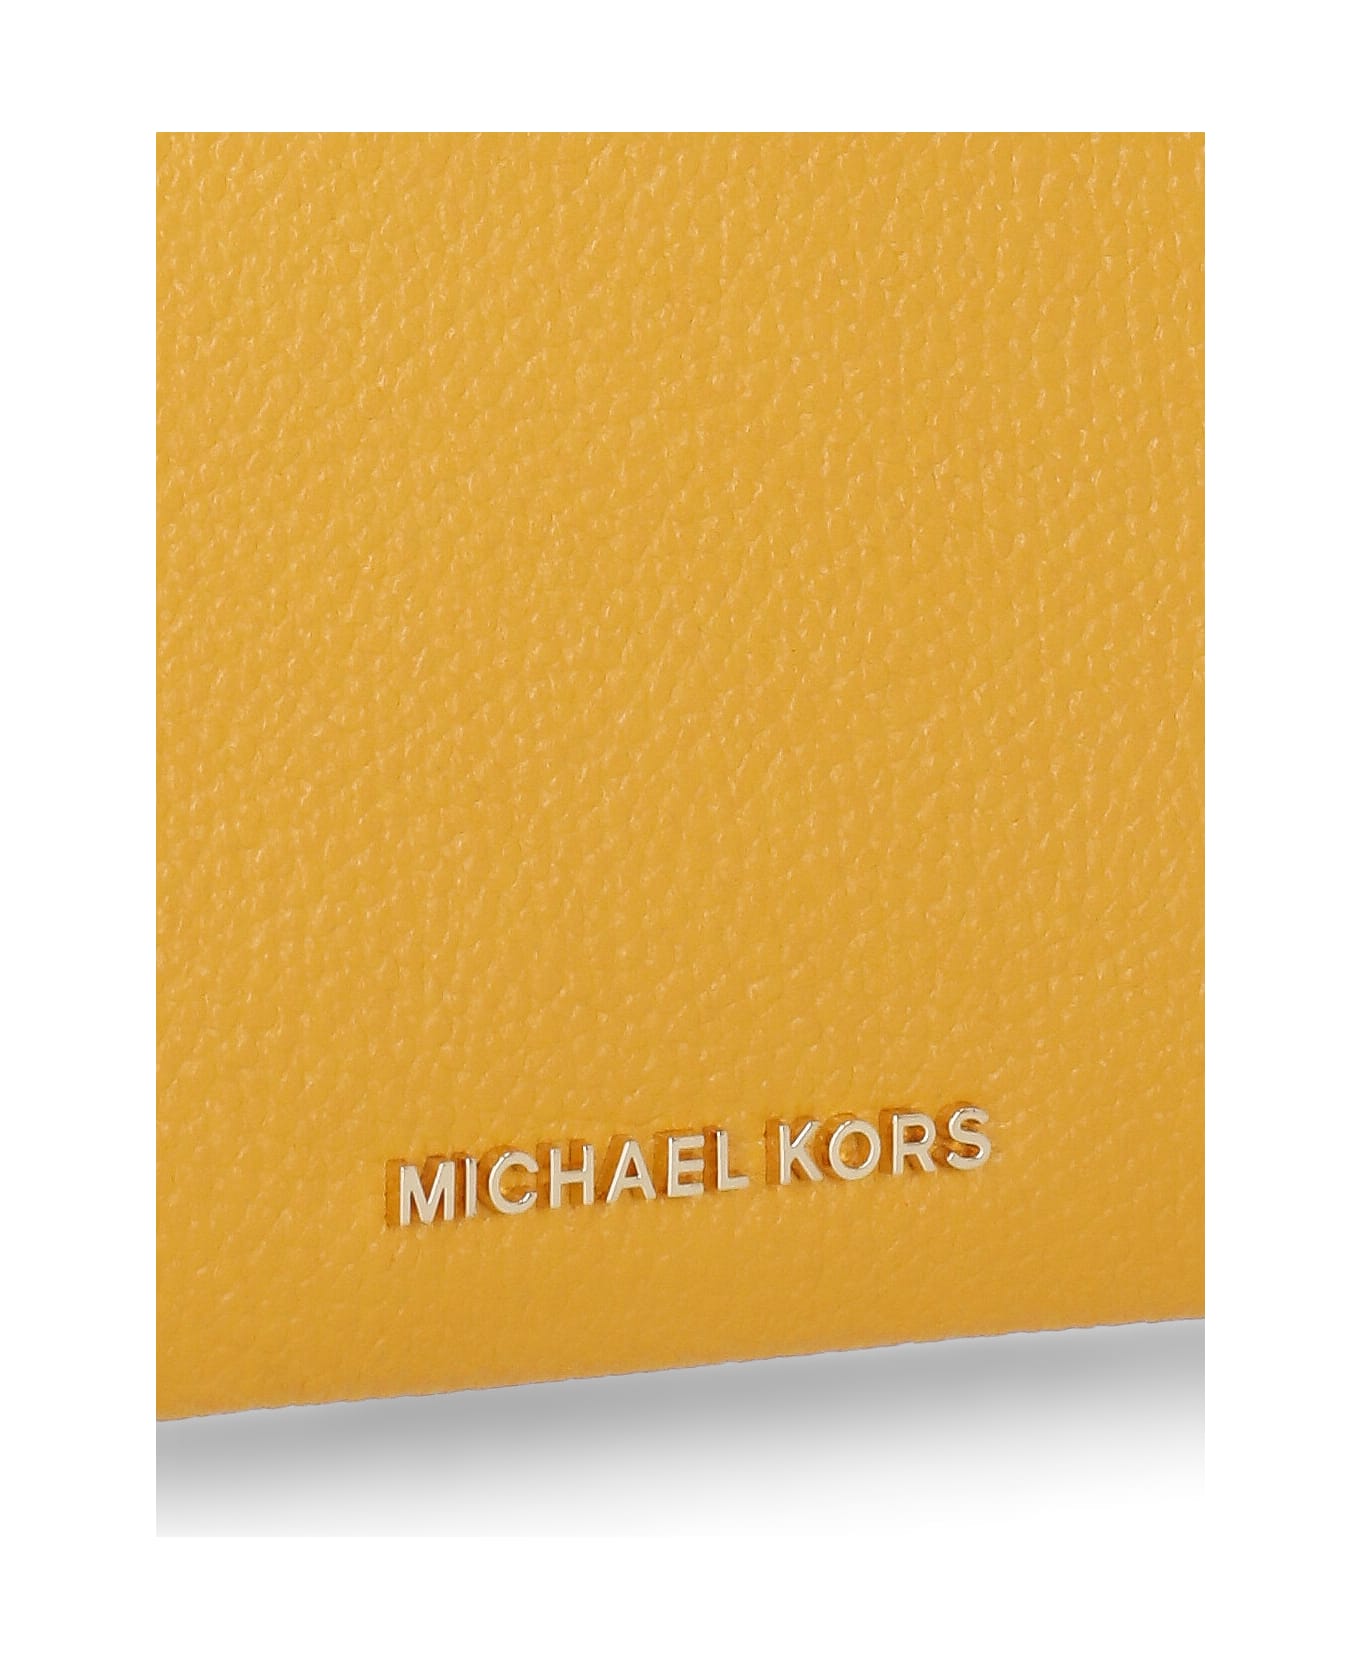 Michael Kors Logo Plaque Zipped Wallet - Yellow 財布